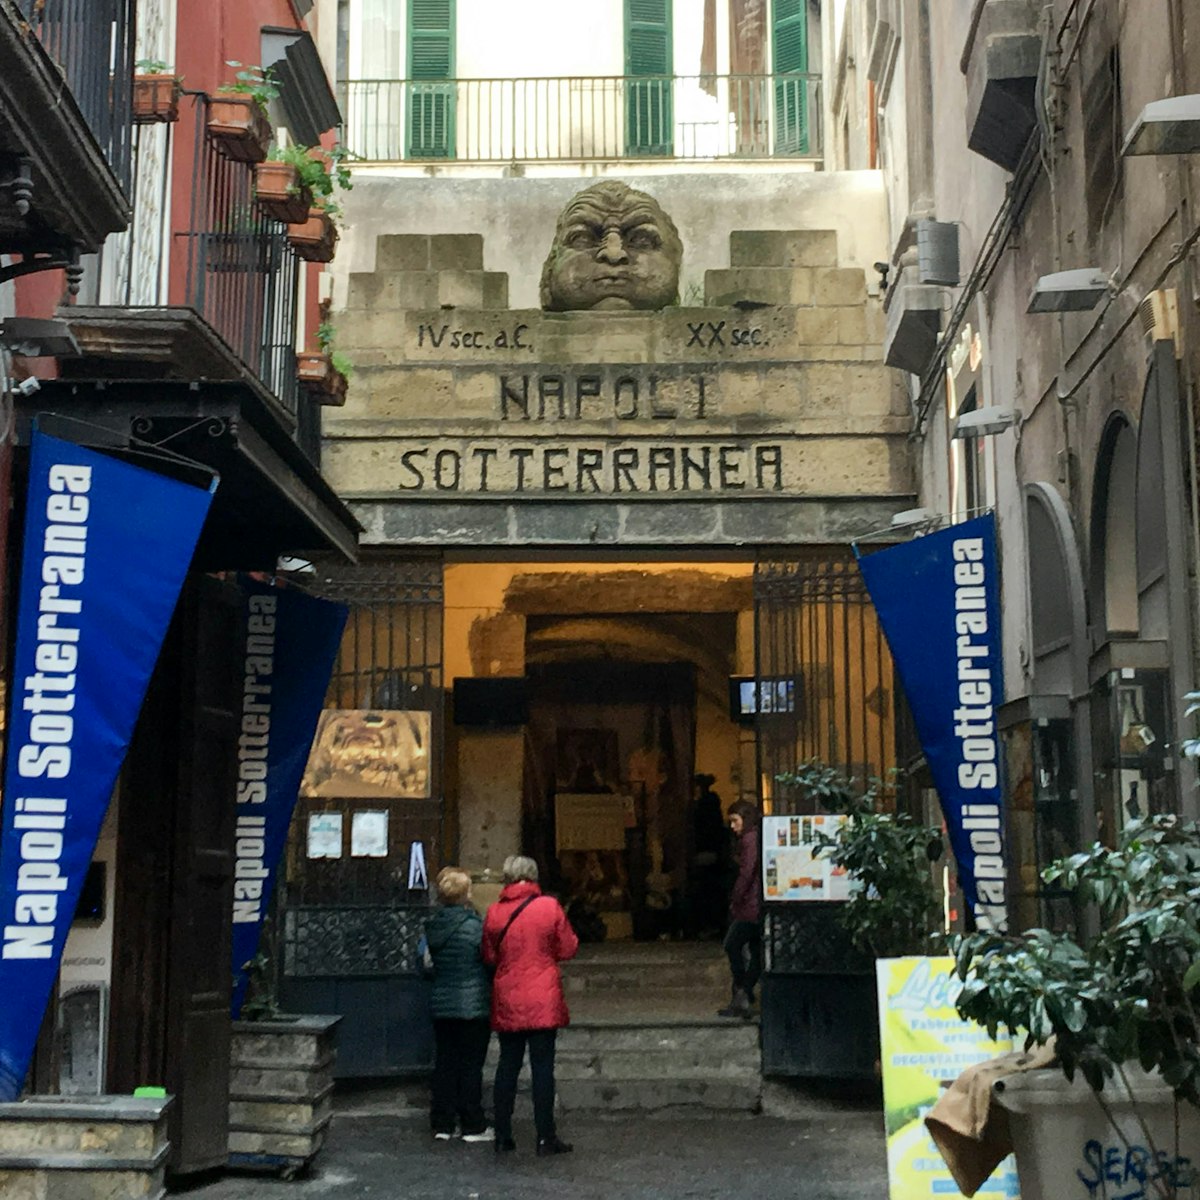 Entrance to Napoli Sotteranea